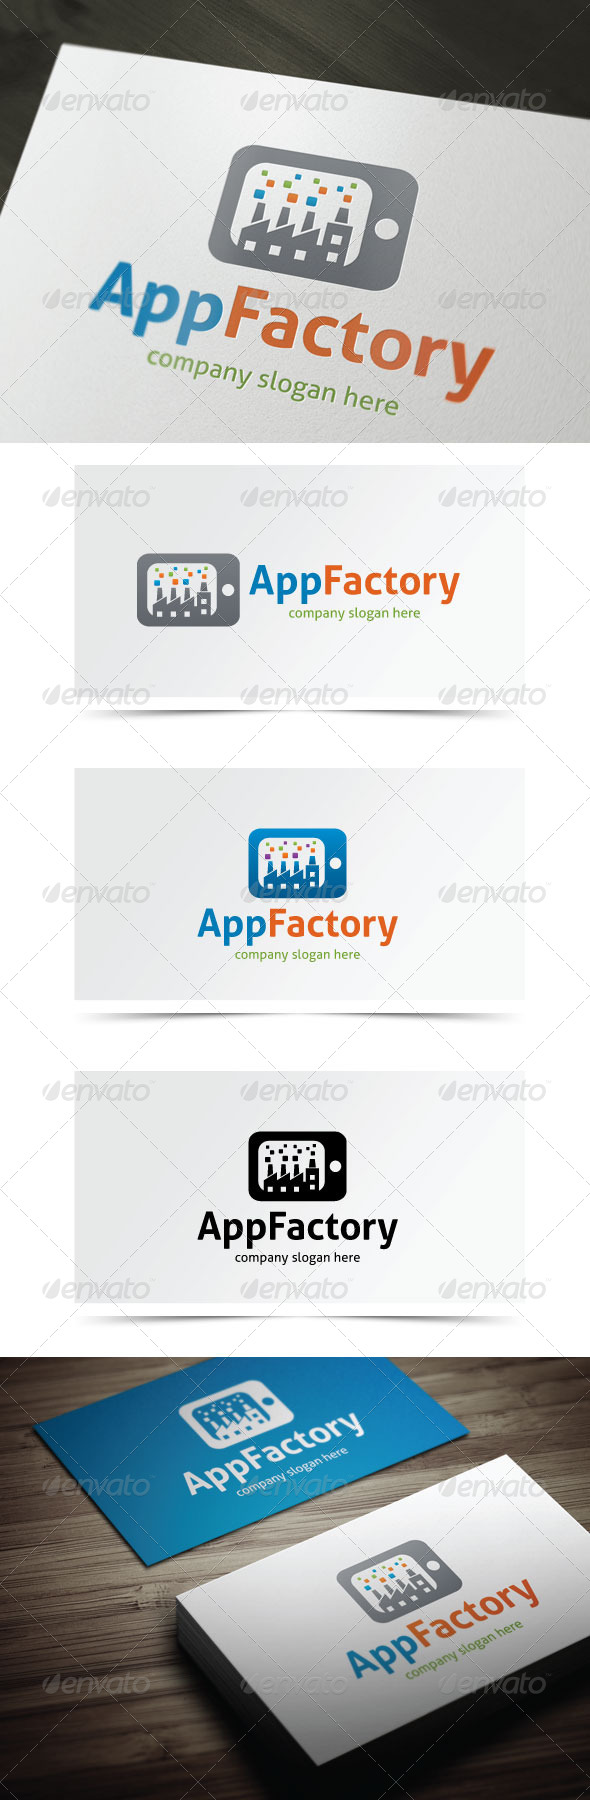 App Factory